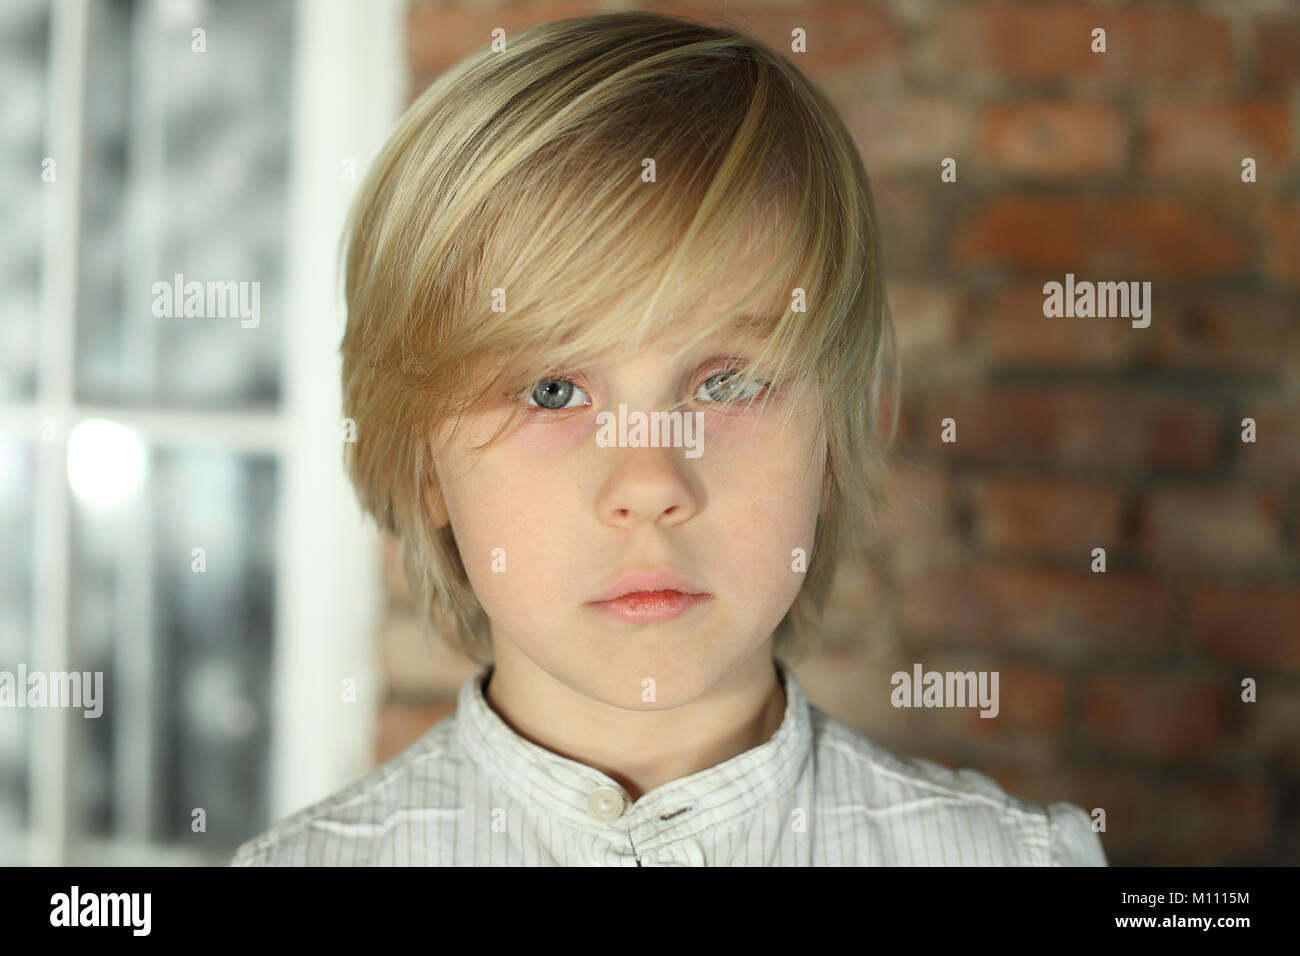 Child boy - face close-up Stock Photo